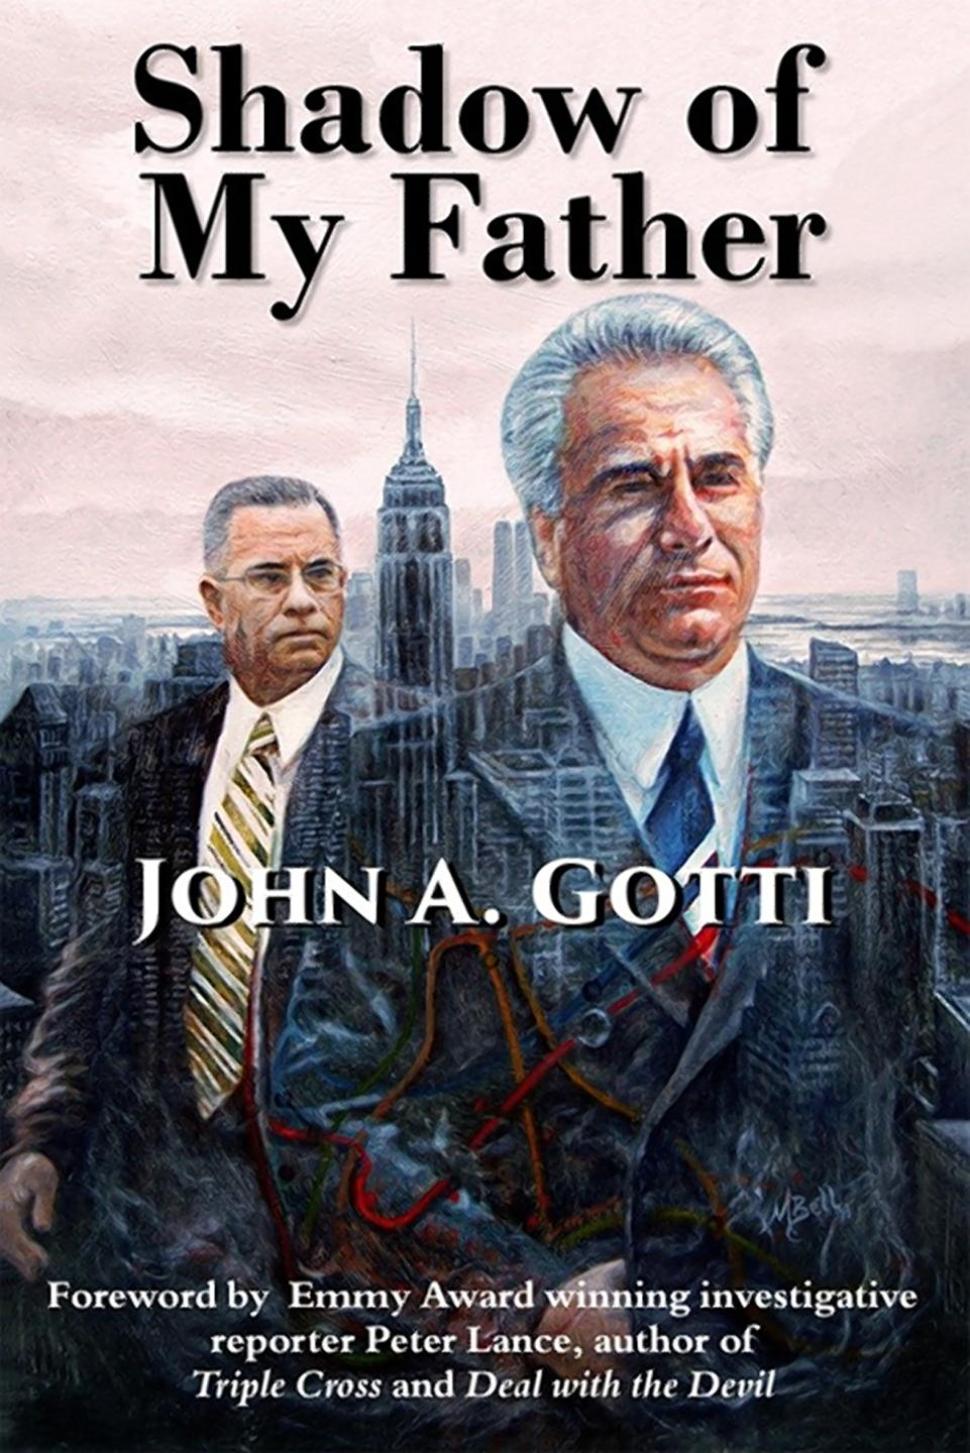 John Gotti Jr.